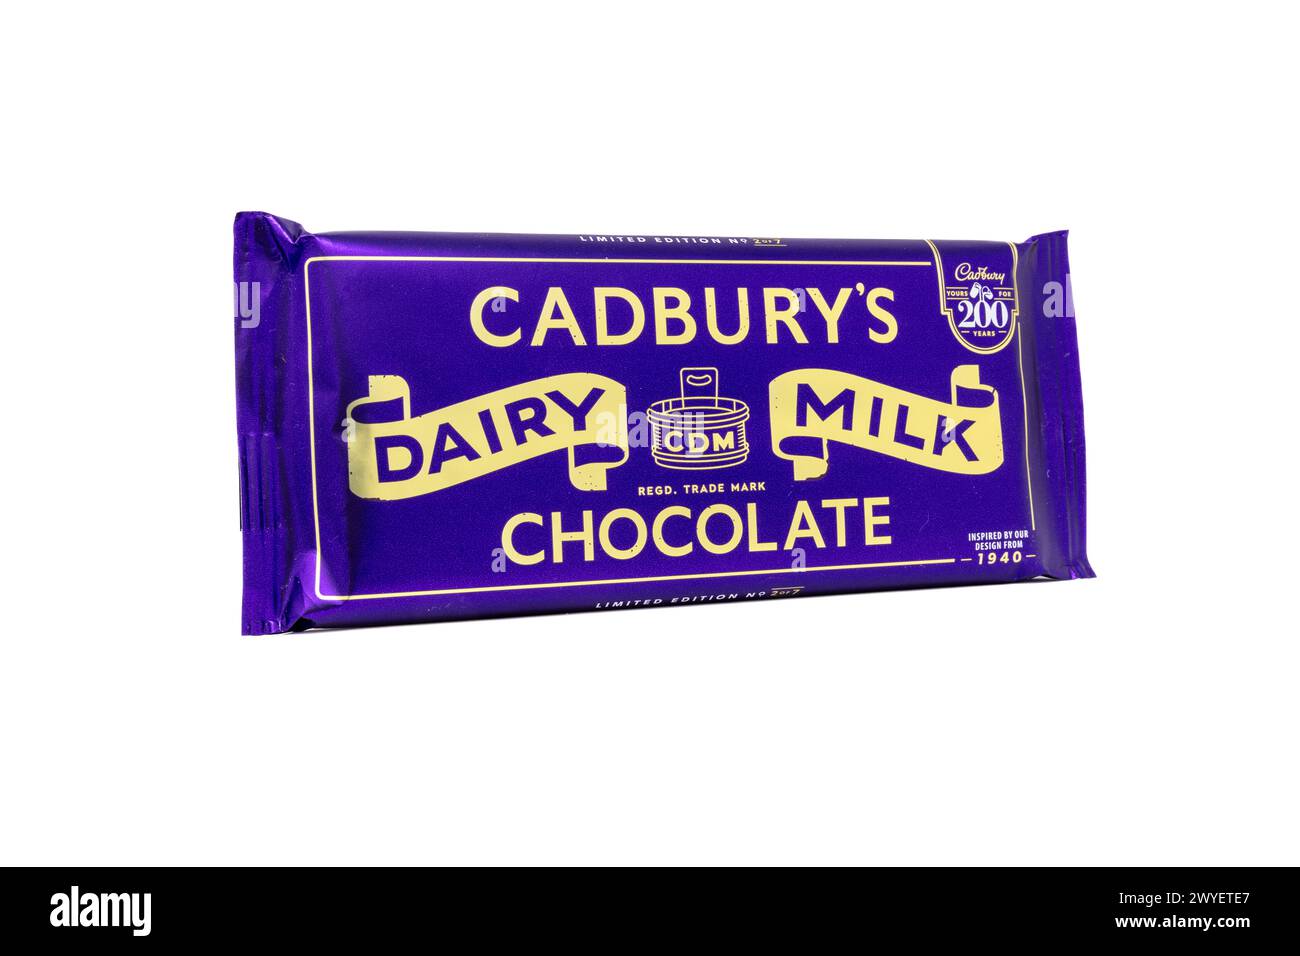 Cadbury Dairy Milk 1940 limited edition wrapper celebrating 200 years of Cadbury’s chocolate. Stock Photo